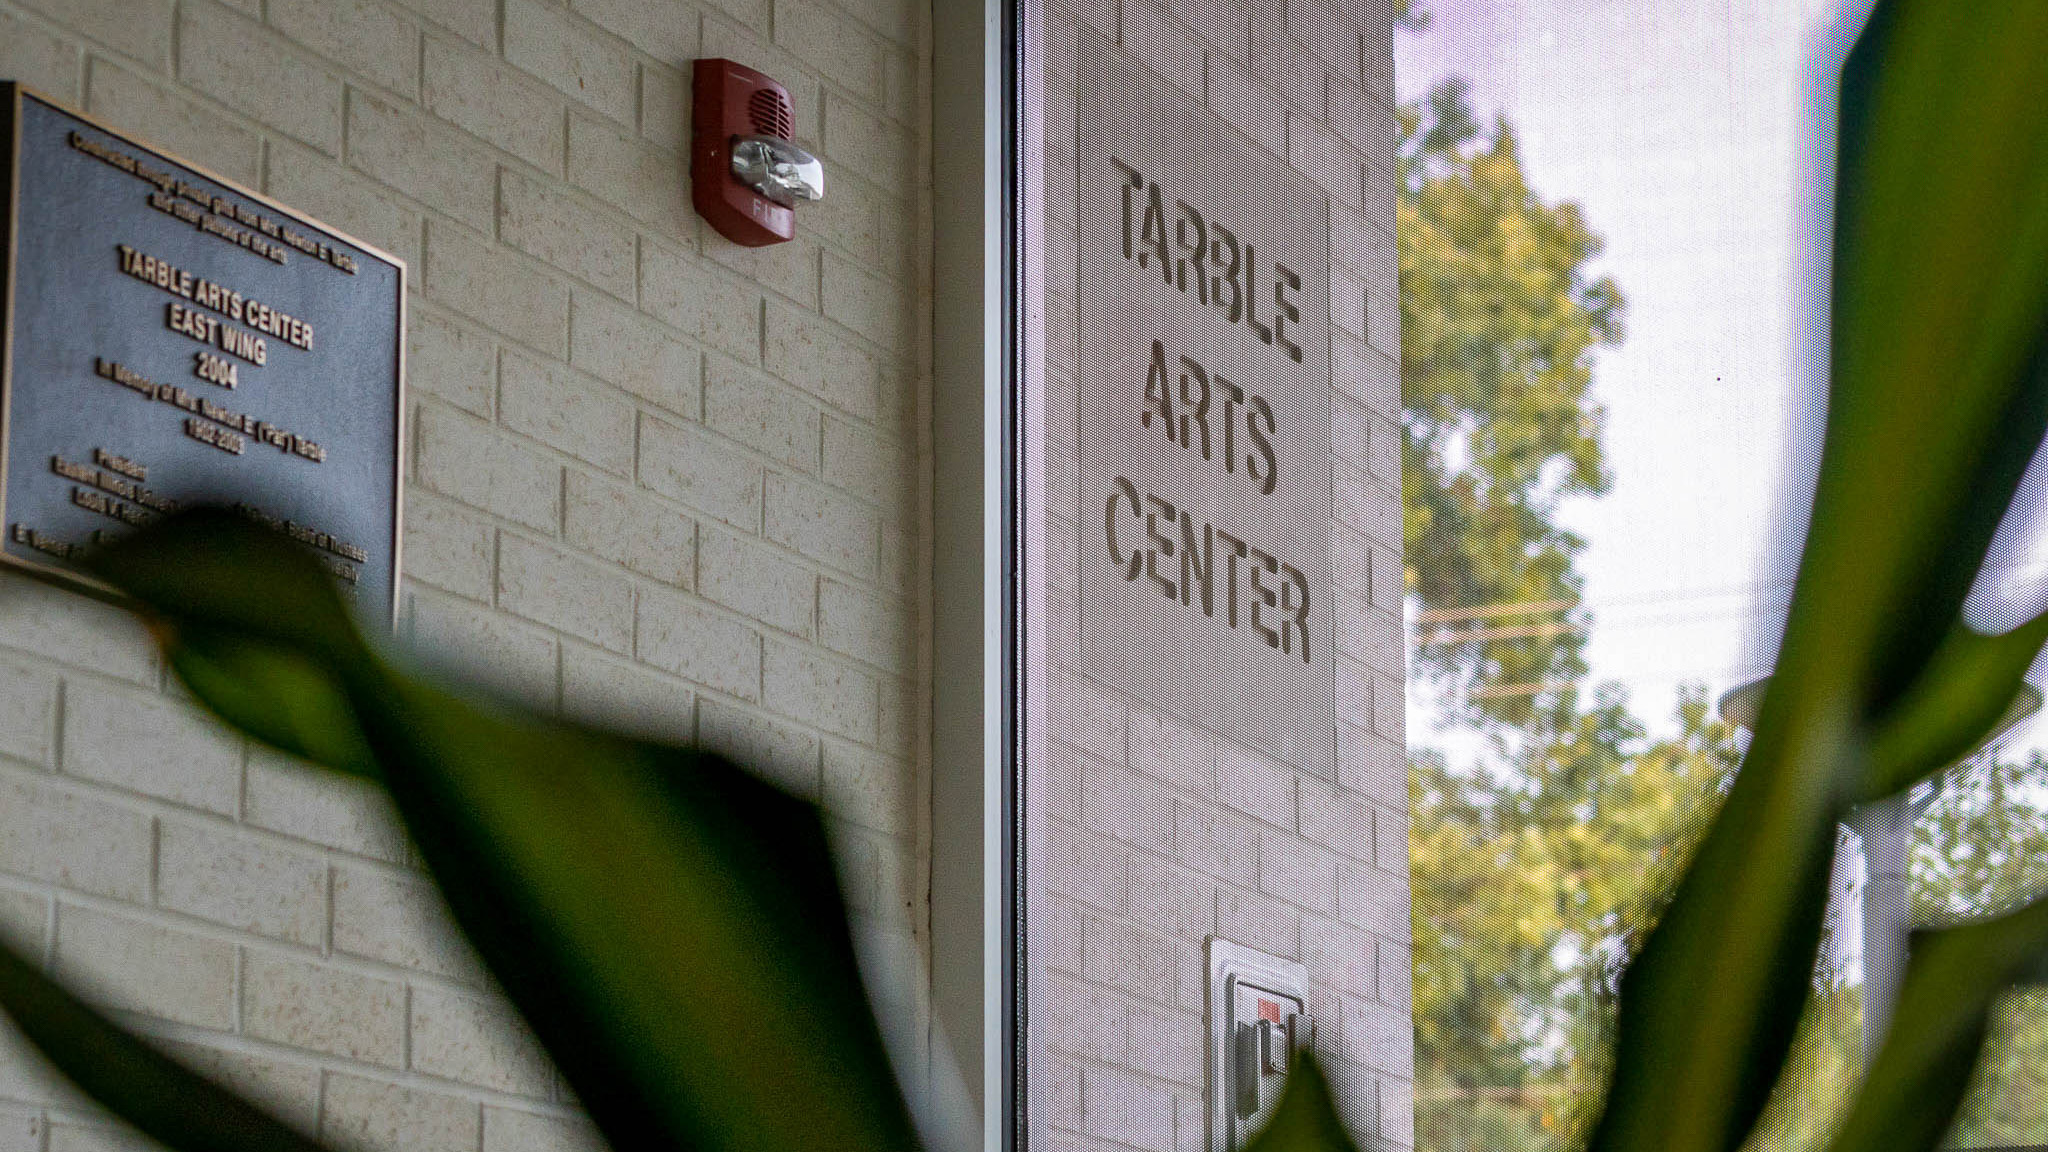 tarble arts center